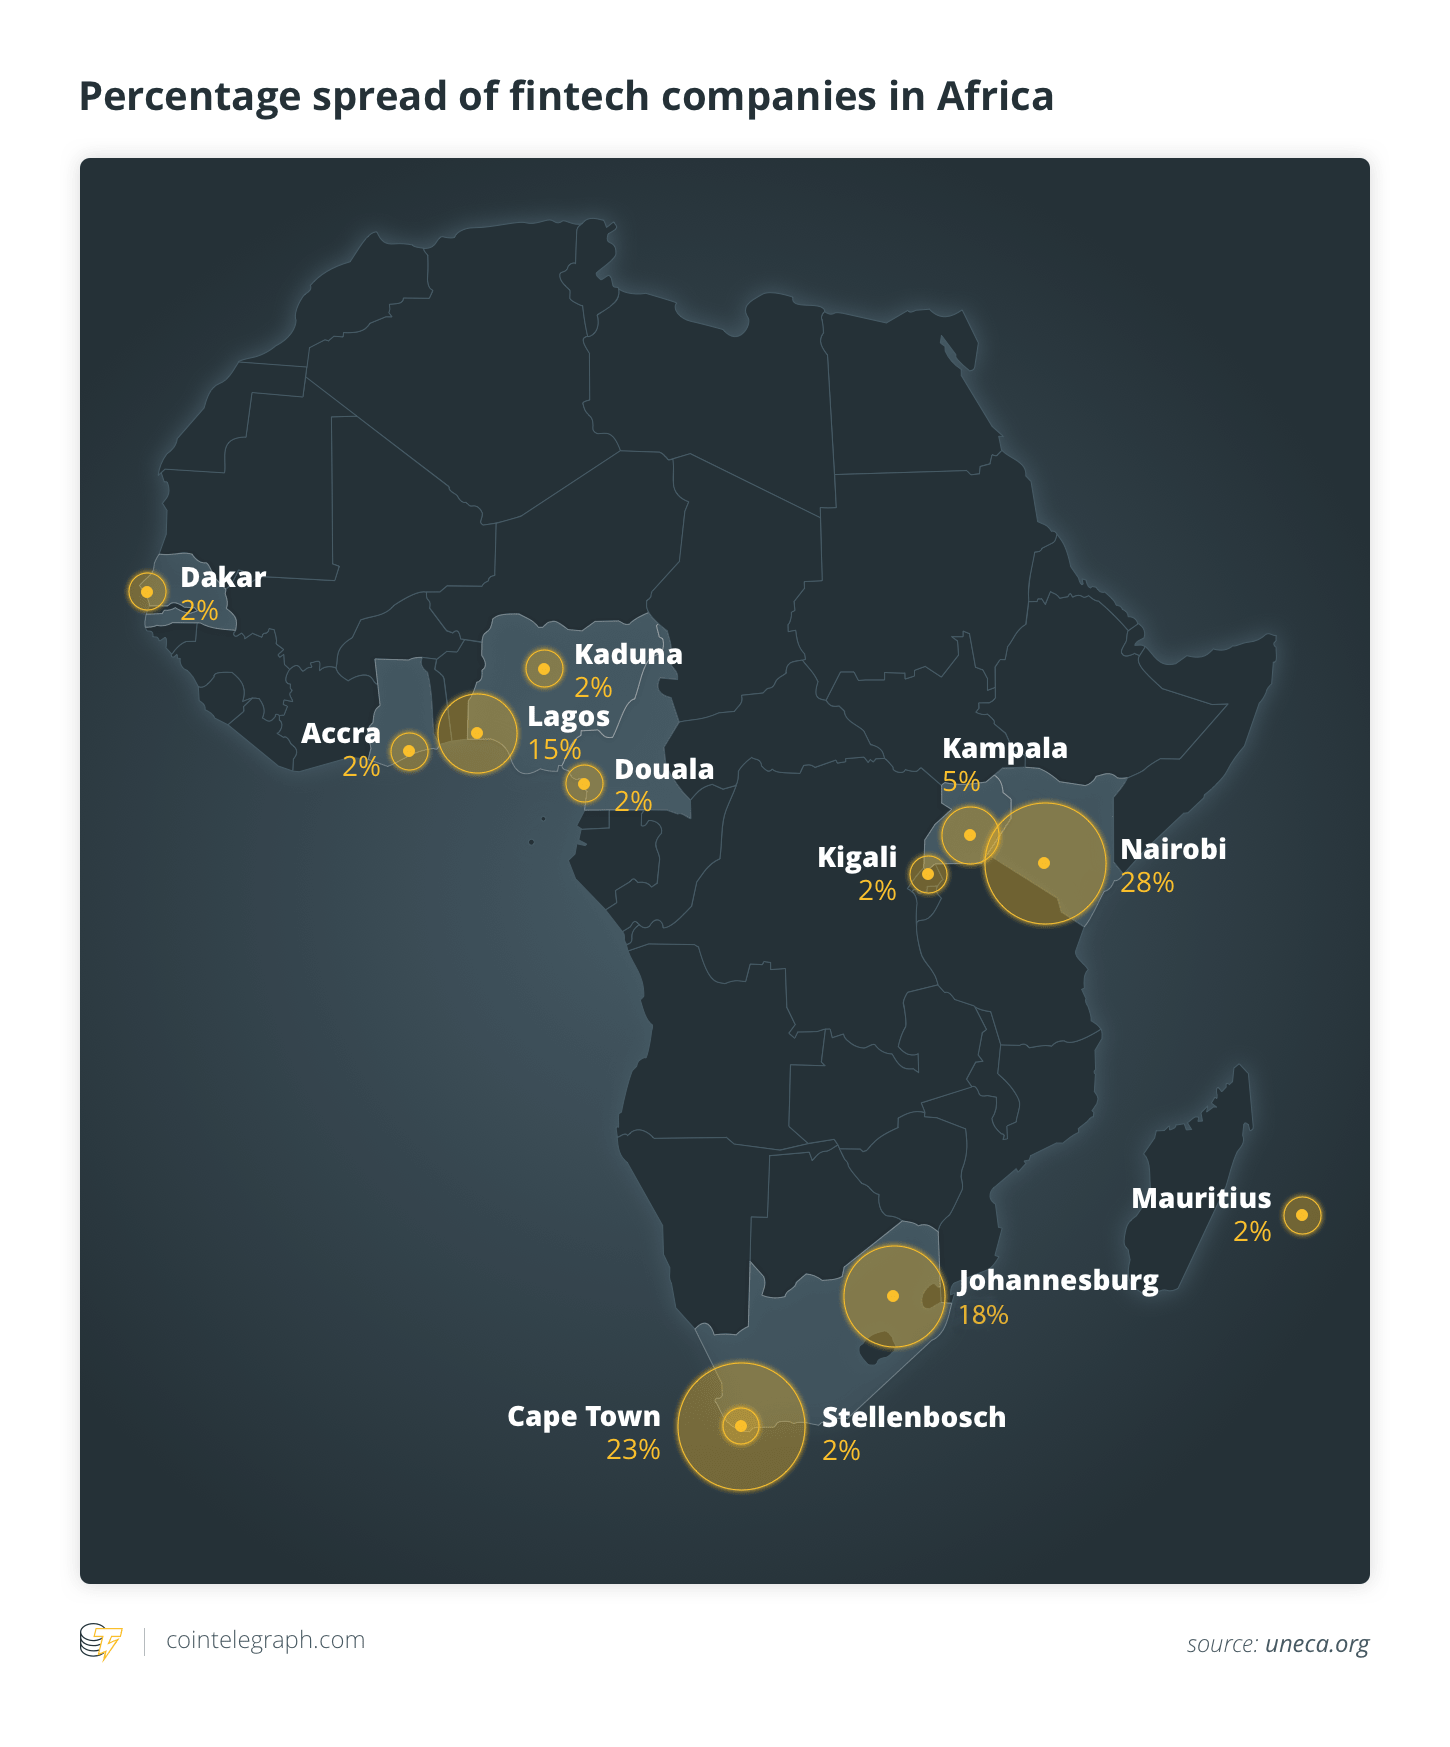 Percentage spread of fintech companies in Africa